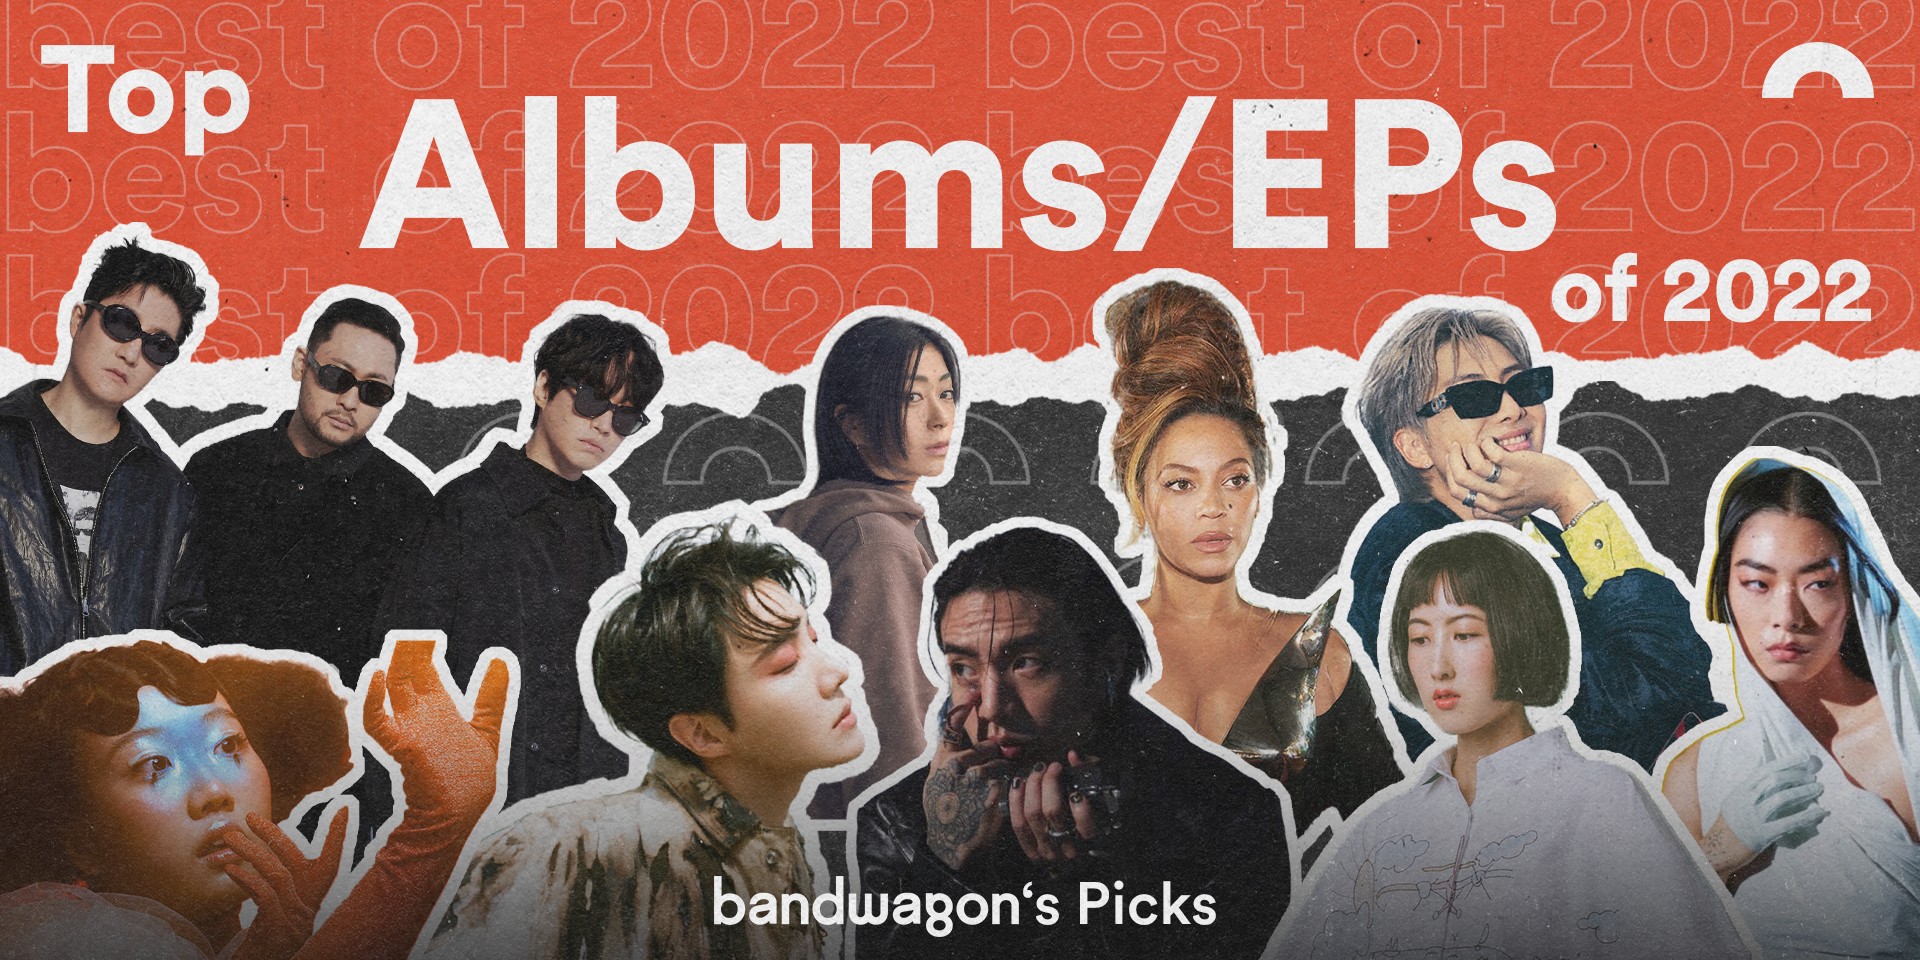 Top Albums/EPs of 2022: Bandwagon's Picks — Epik High, Beyoncé, RM, ena mori, j-hope, DPR IAN, Utada Hikaru, and more